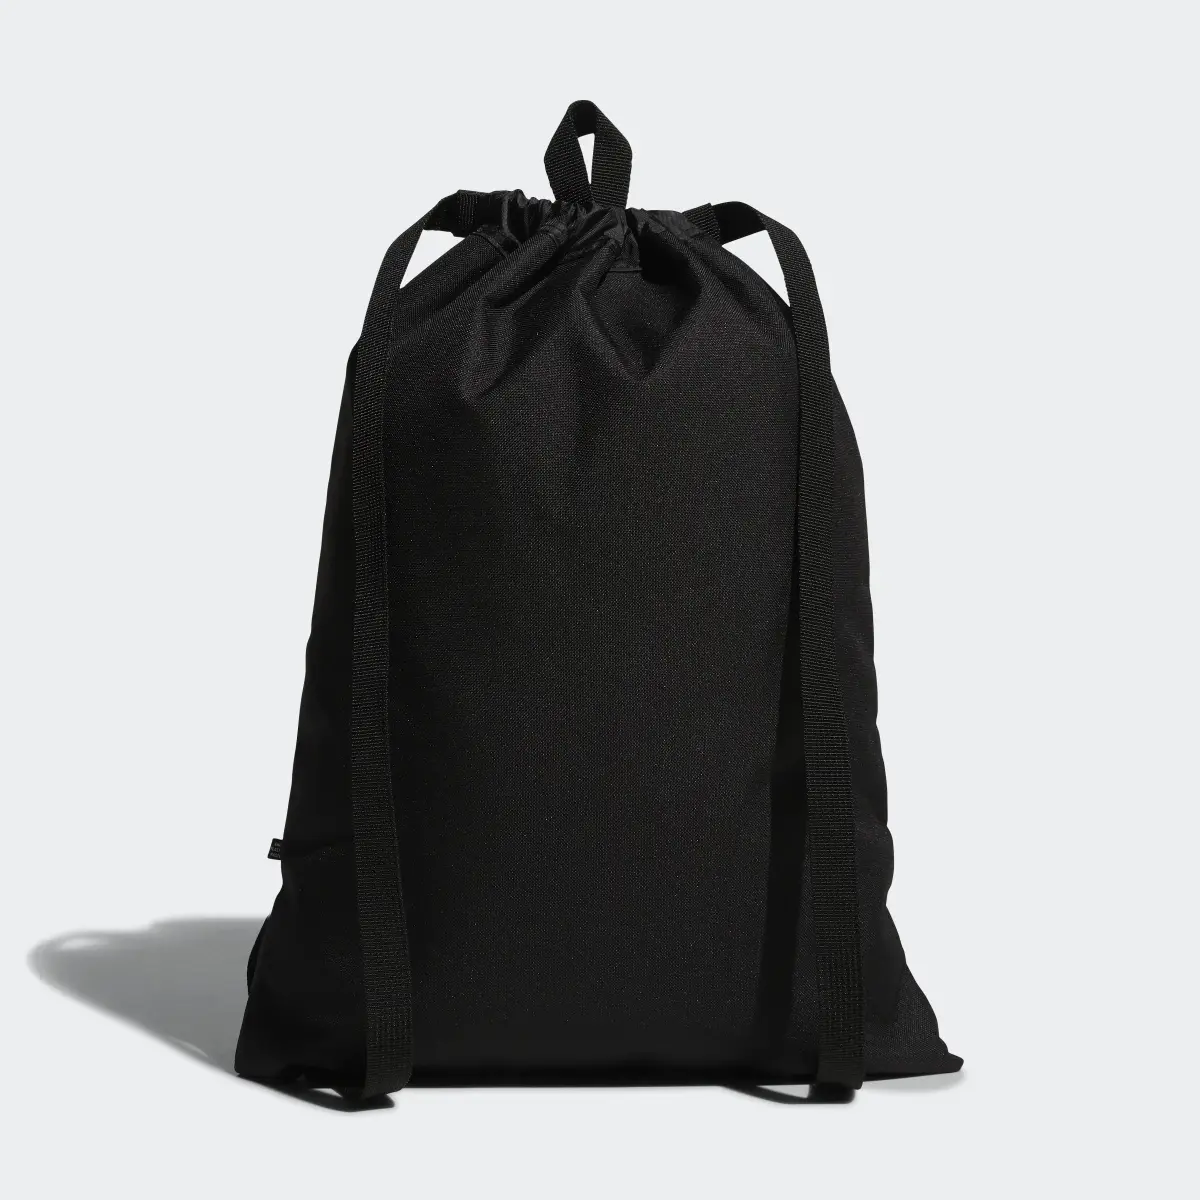 Adidas Optimized Packing System Gym Bag. 3